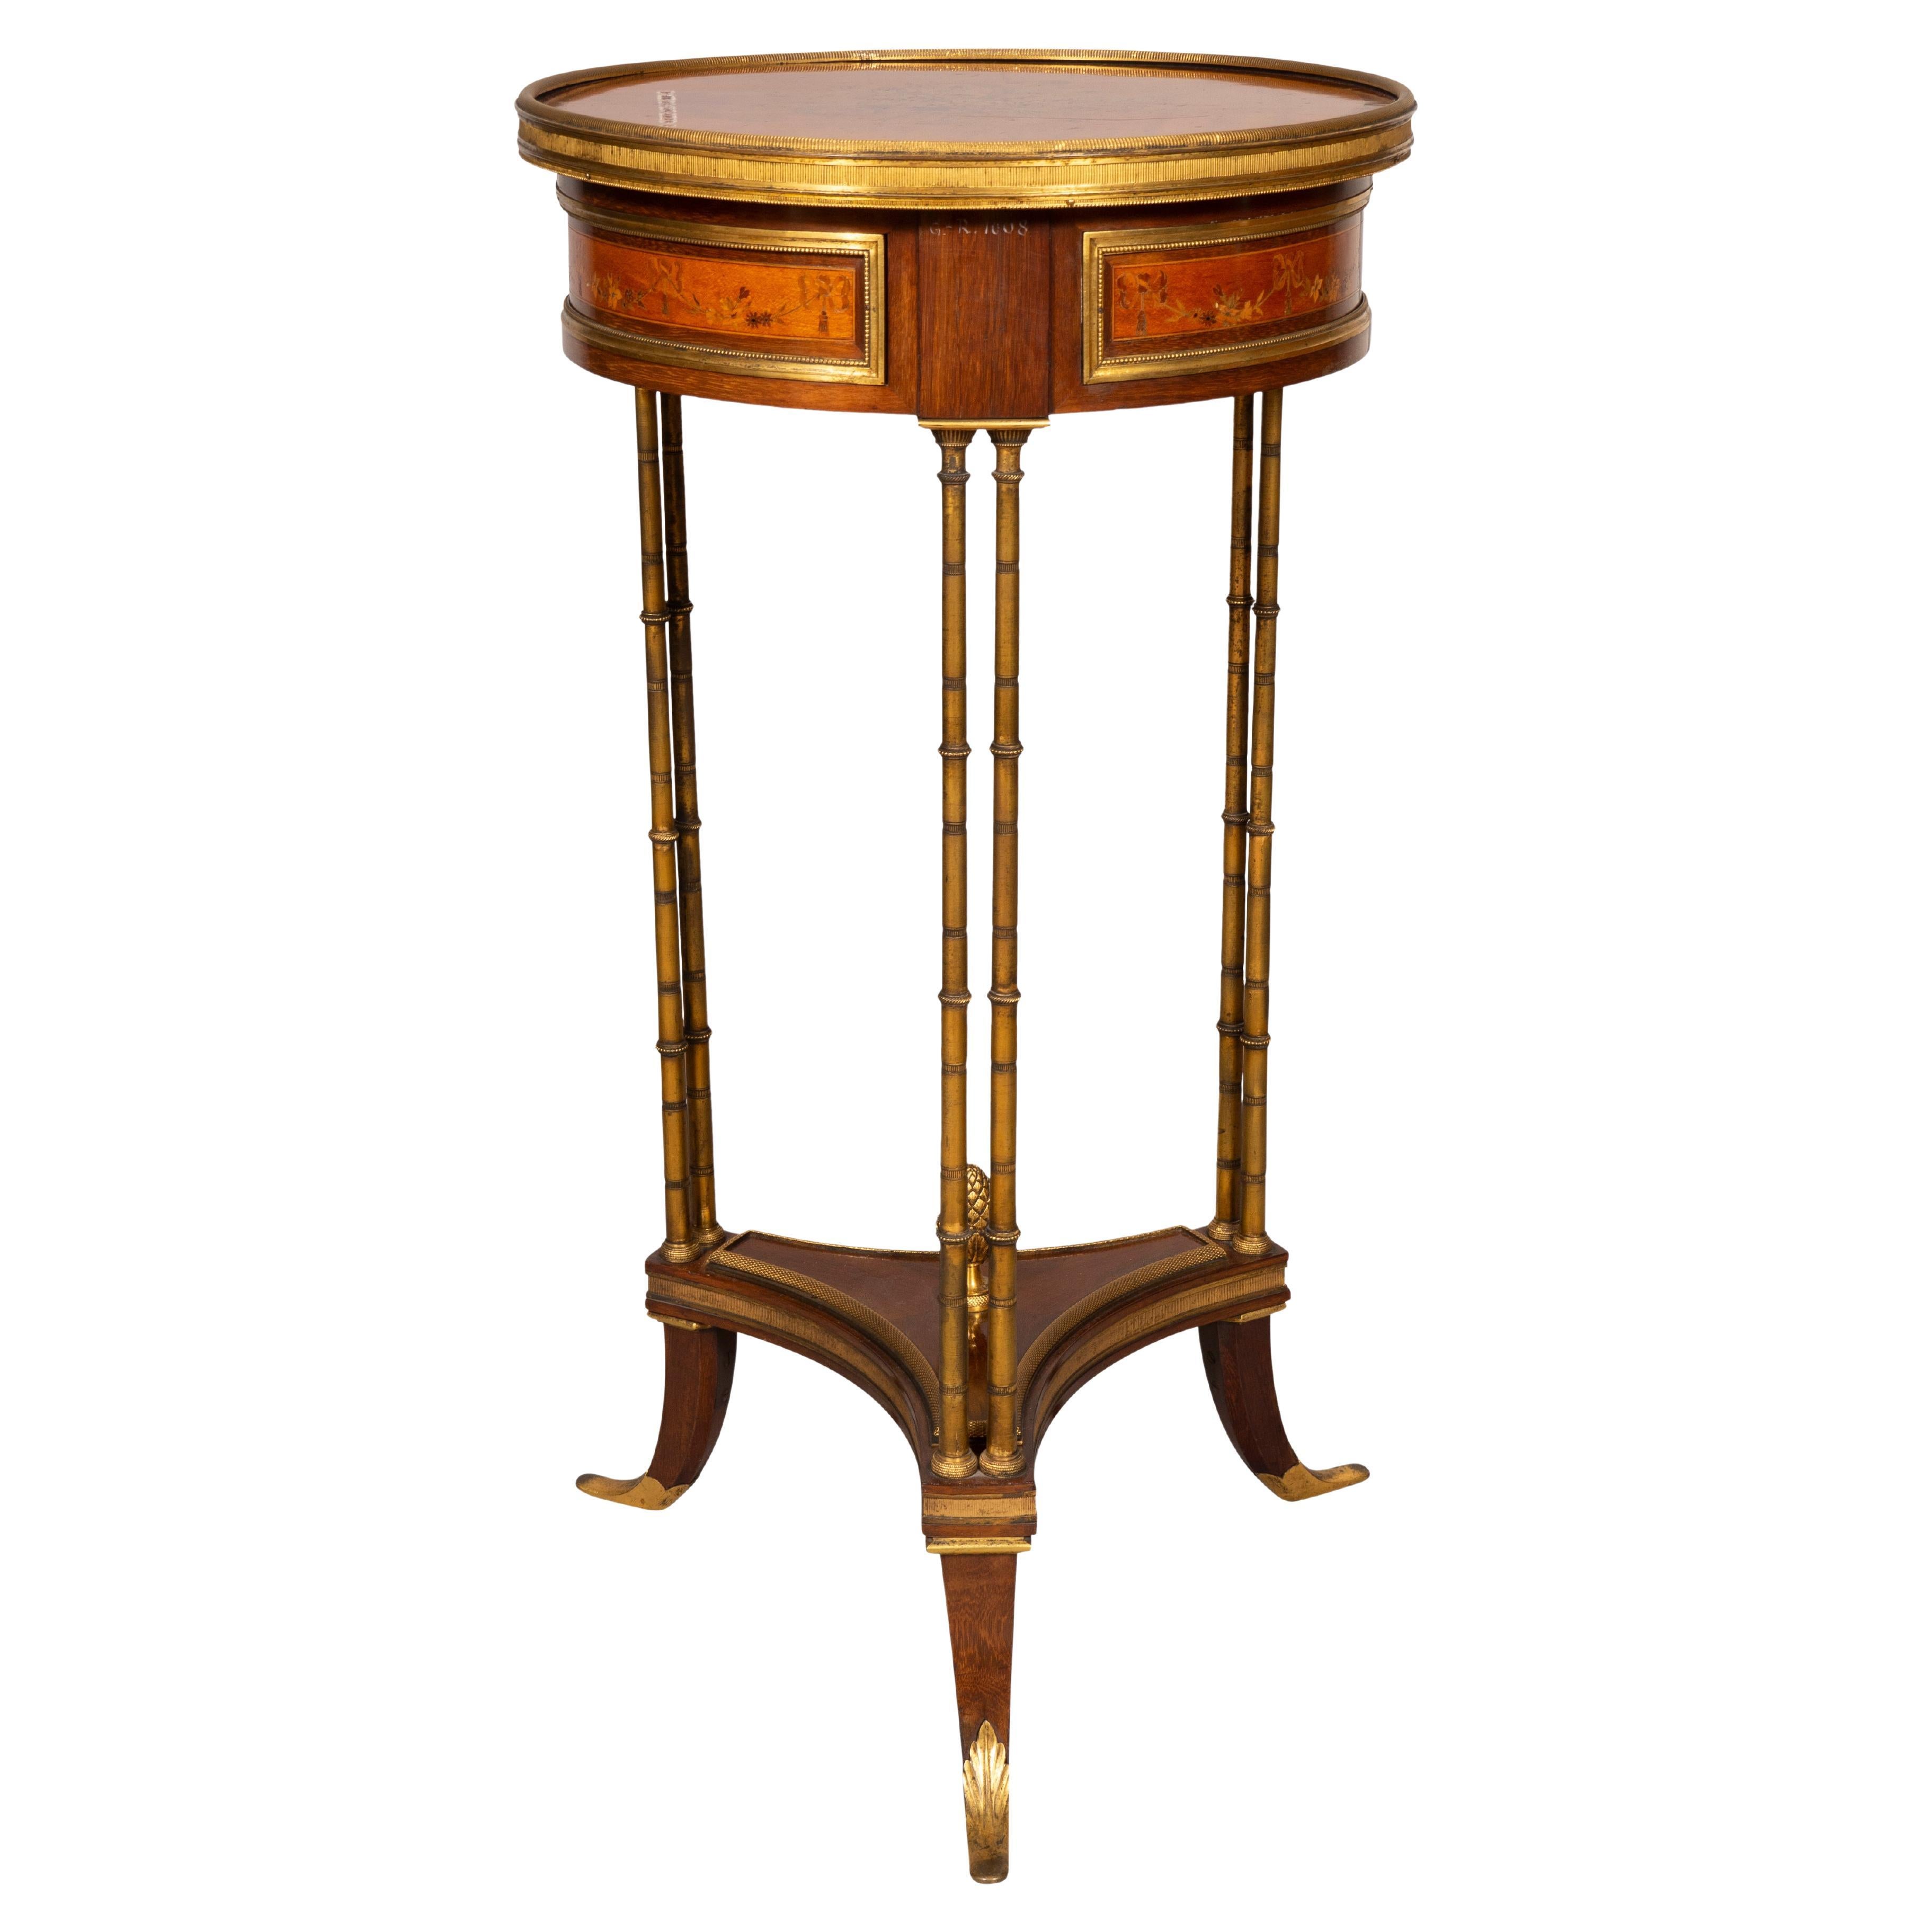 Fine table de style George III en bois de satin et palissandre